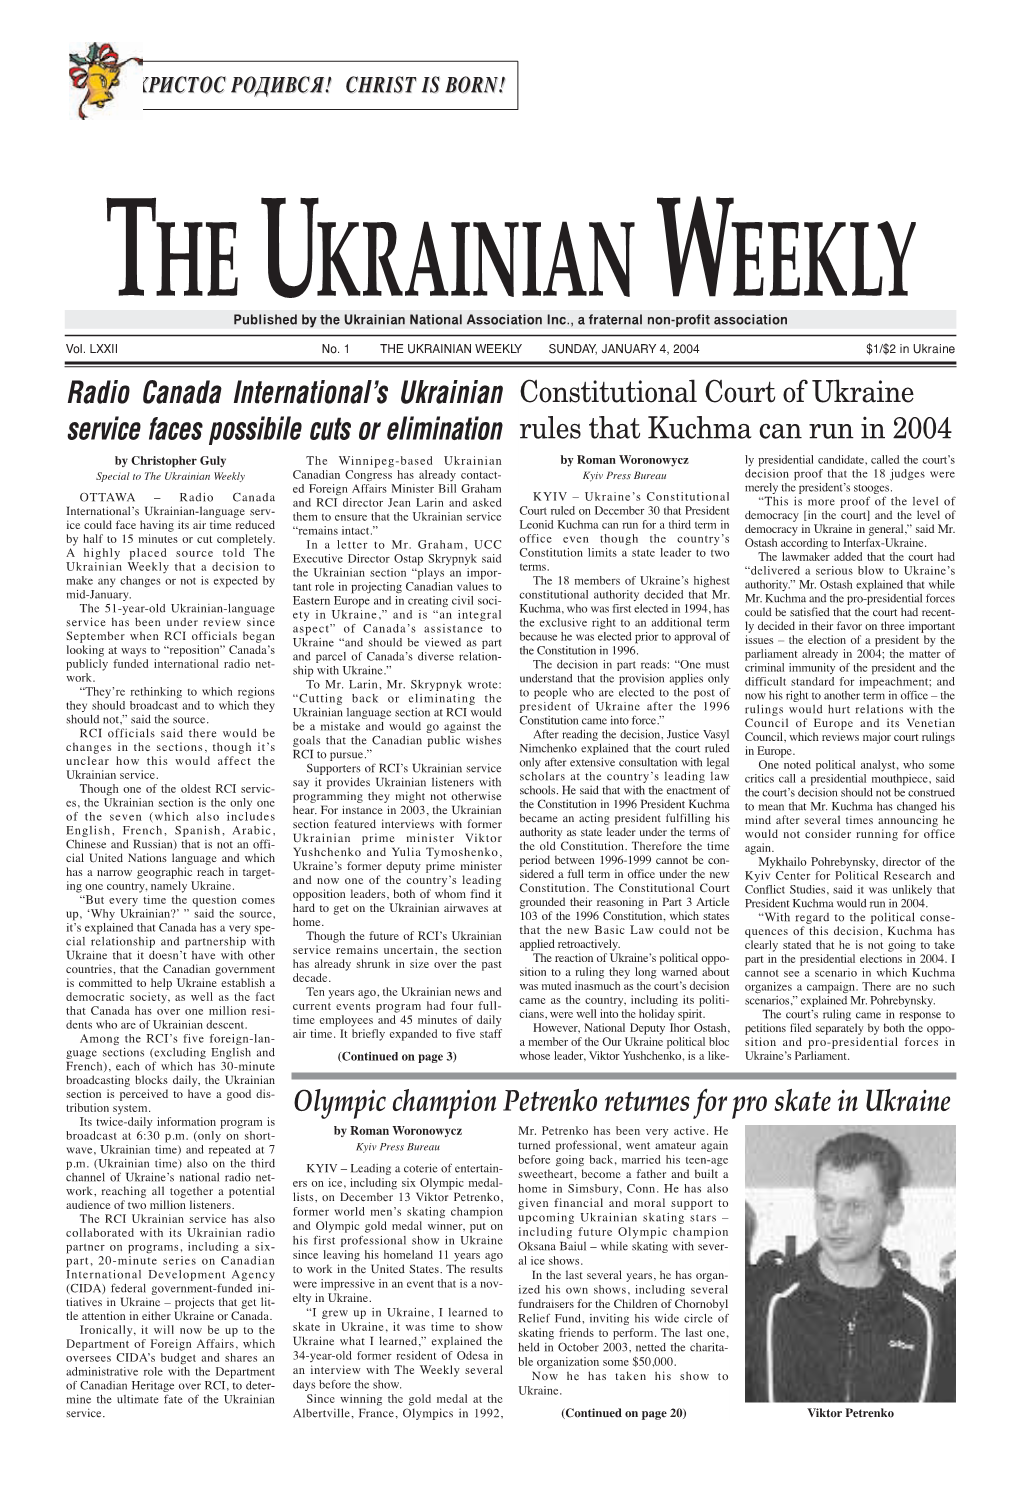 The Ukrainian Weekly 2004, No.1